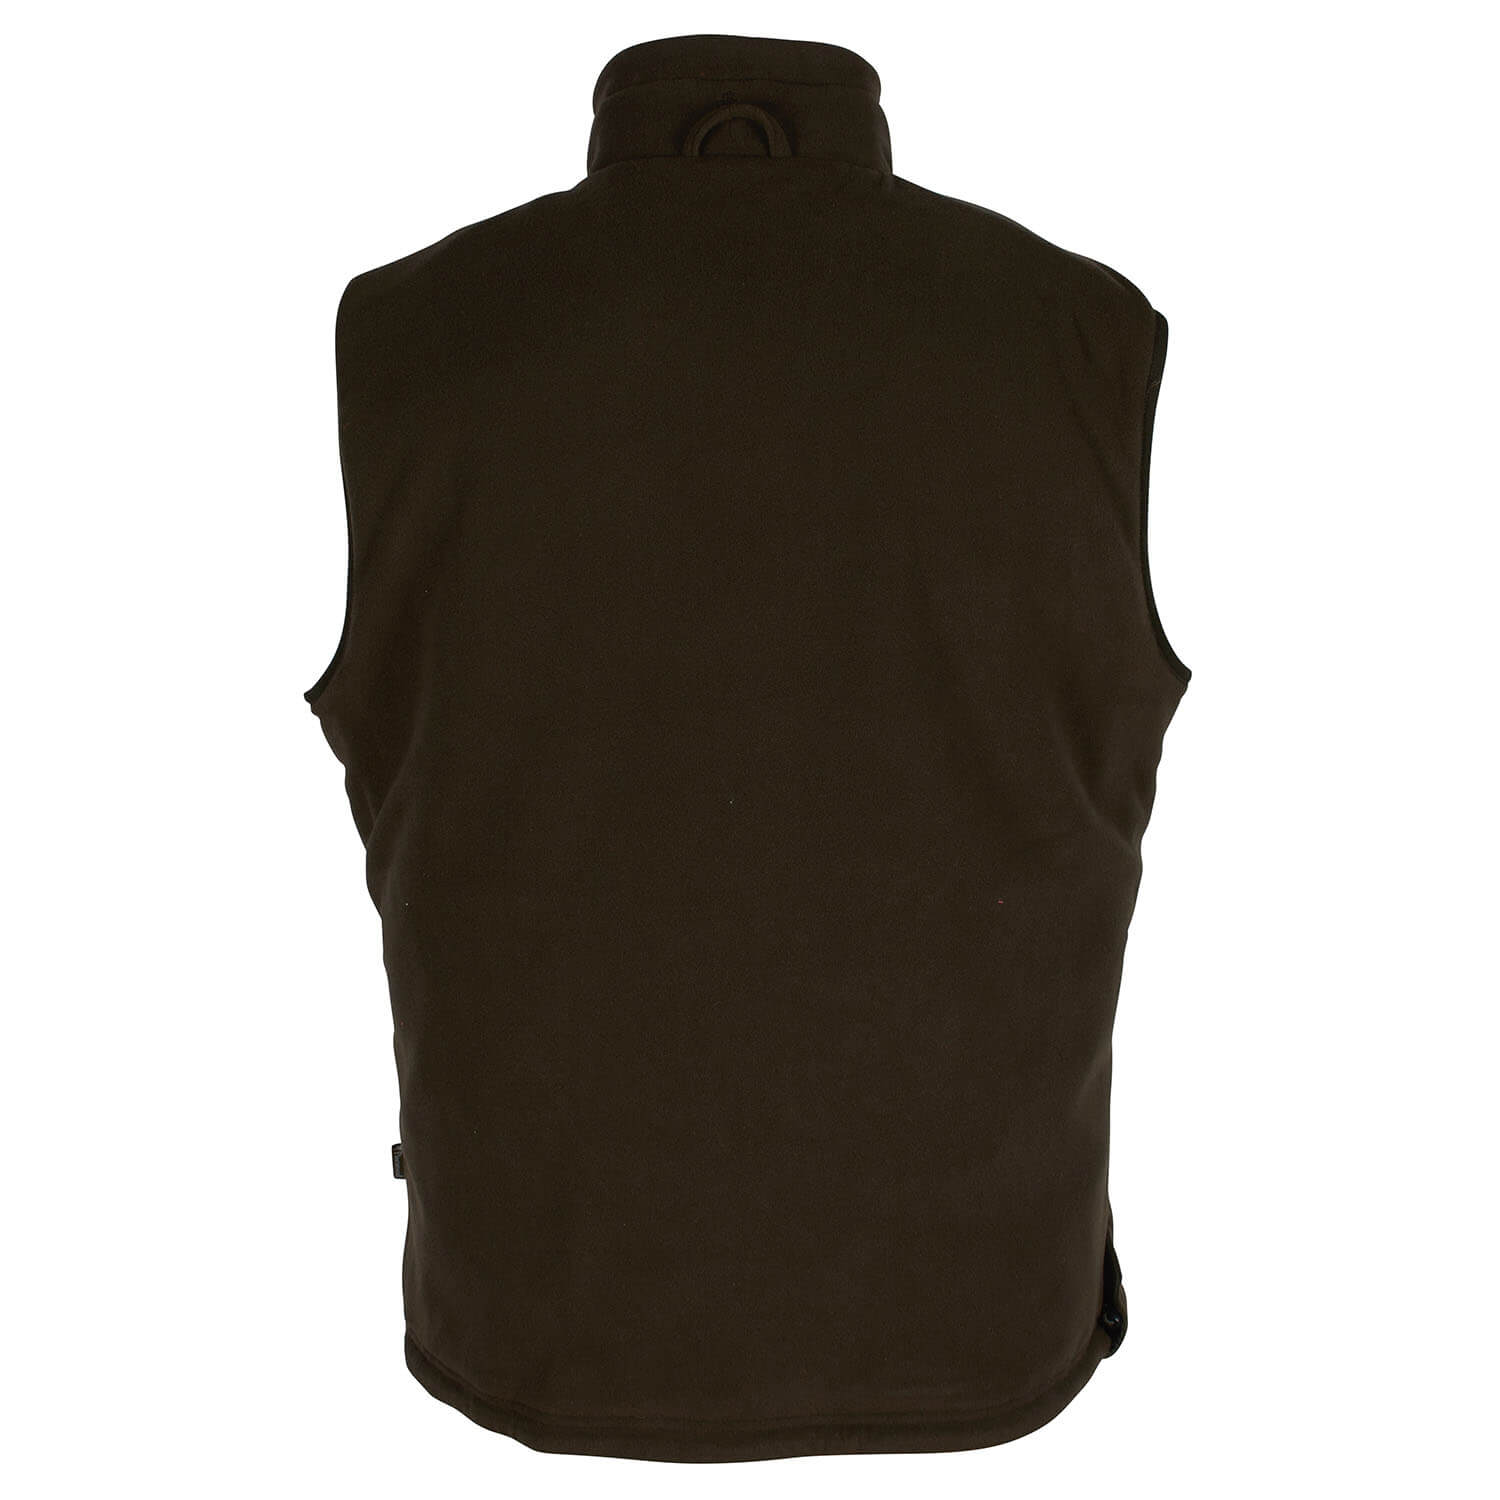 Pinewood reversible vest Smaland